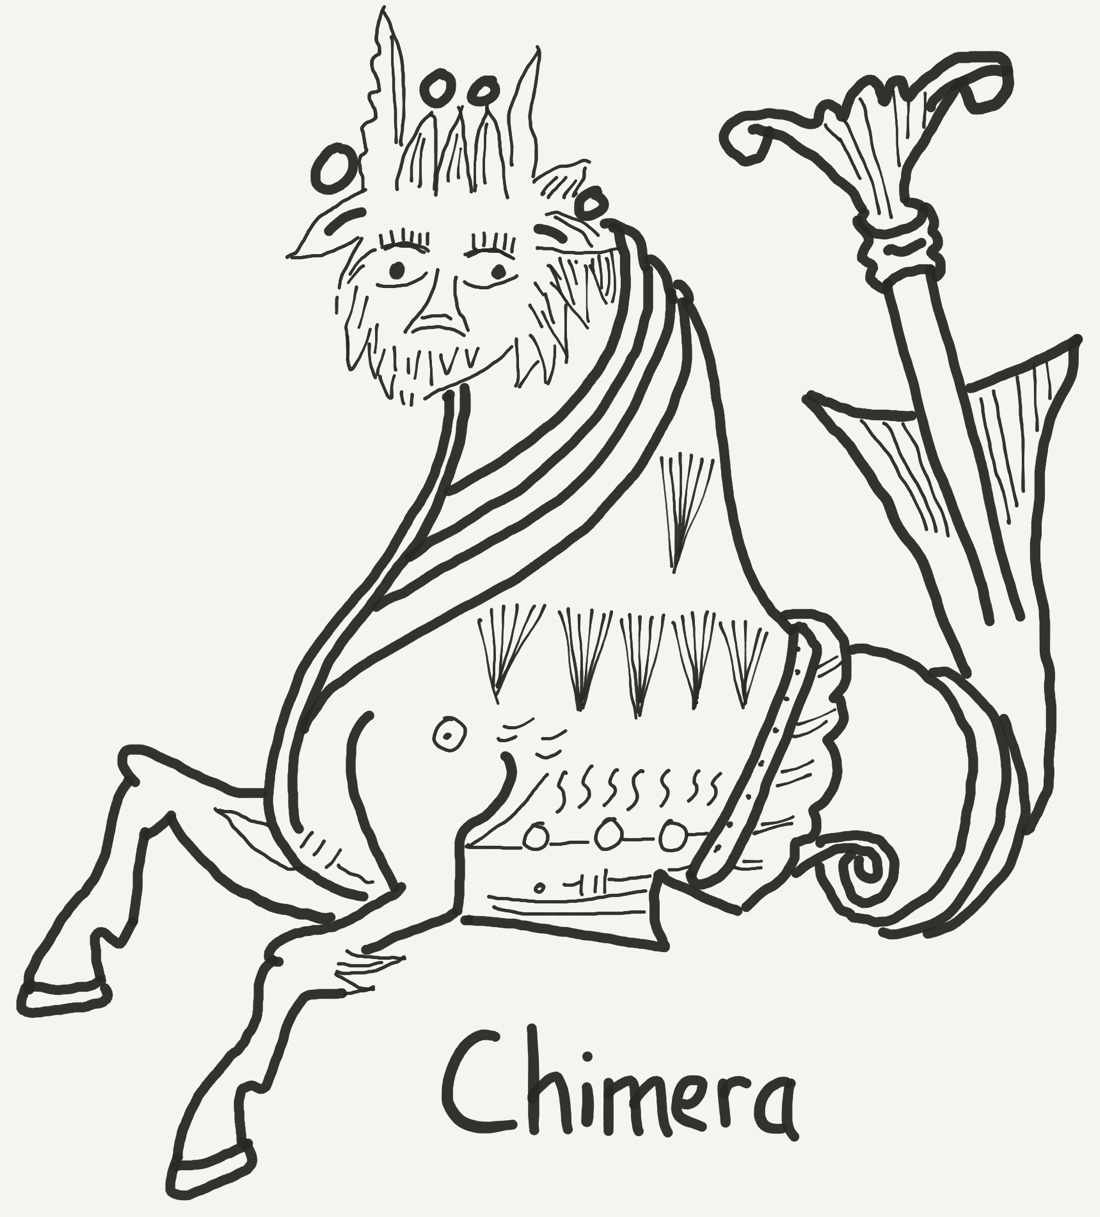 Drawn Chimera figure